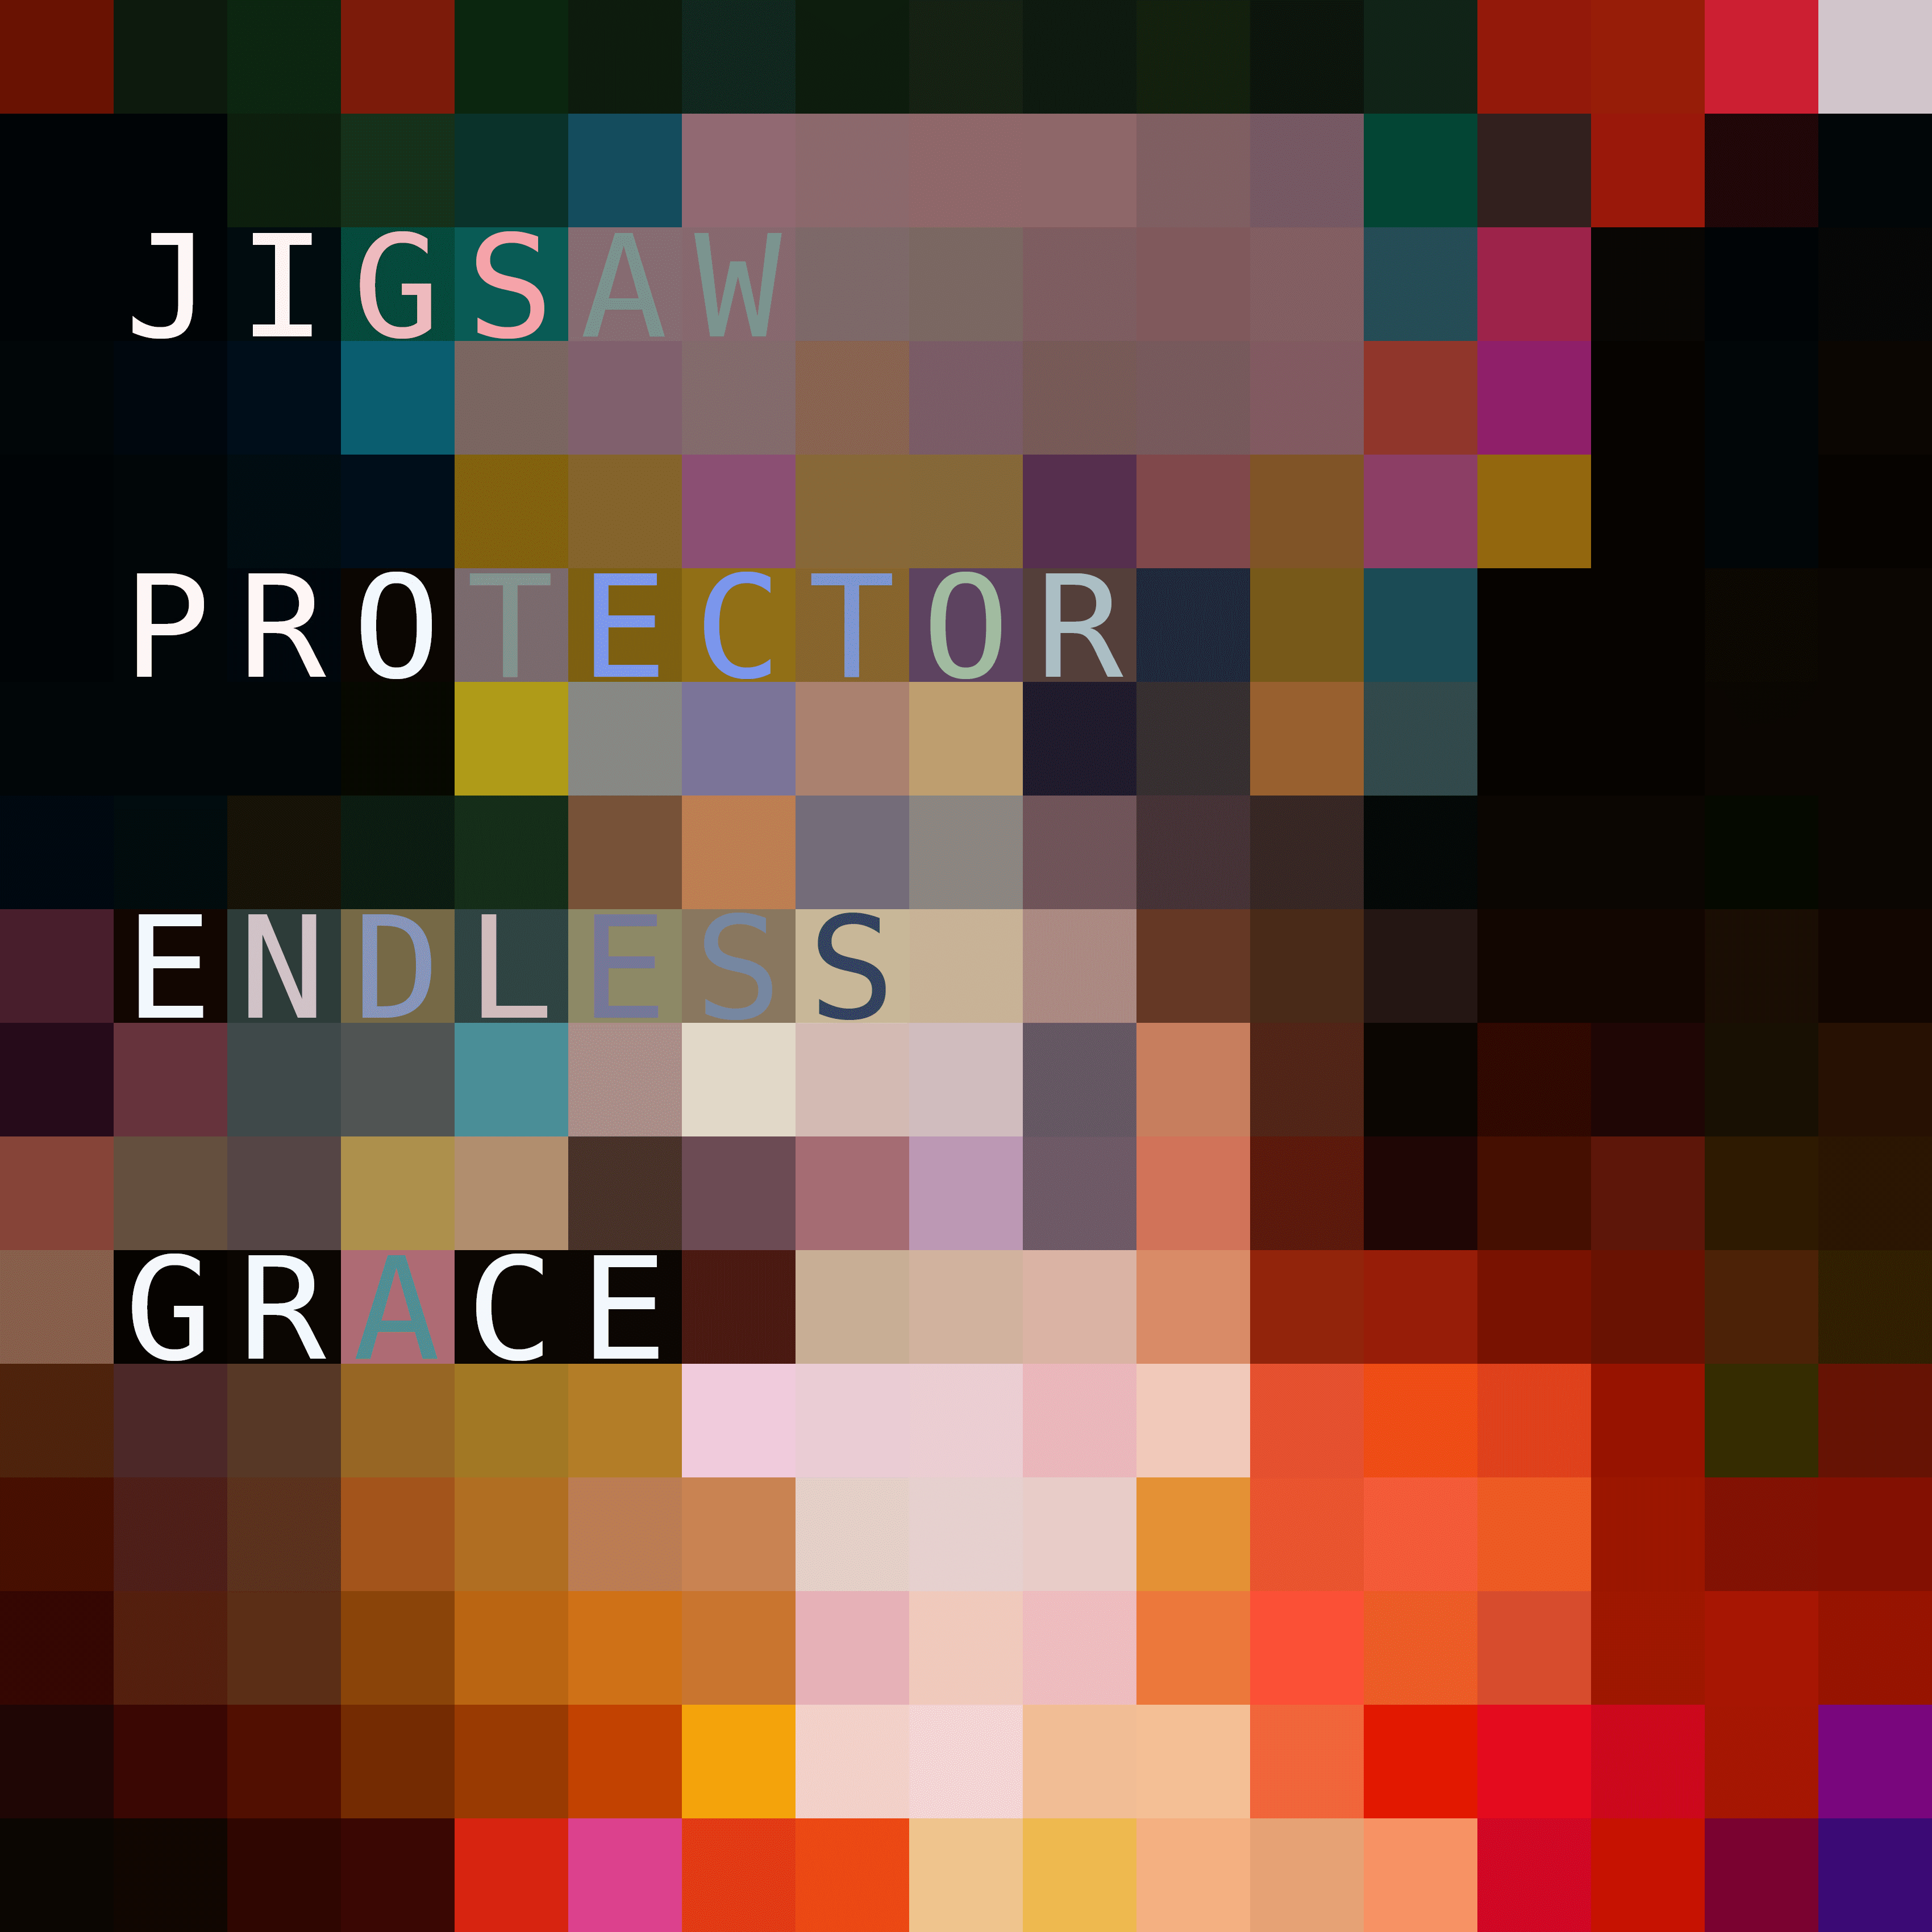 JIGSAW PROTECTOR ENDLESS GRACE